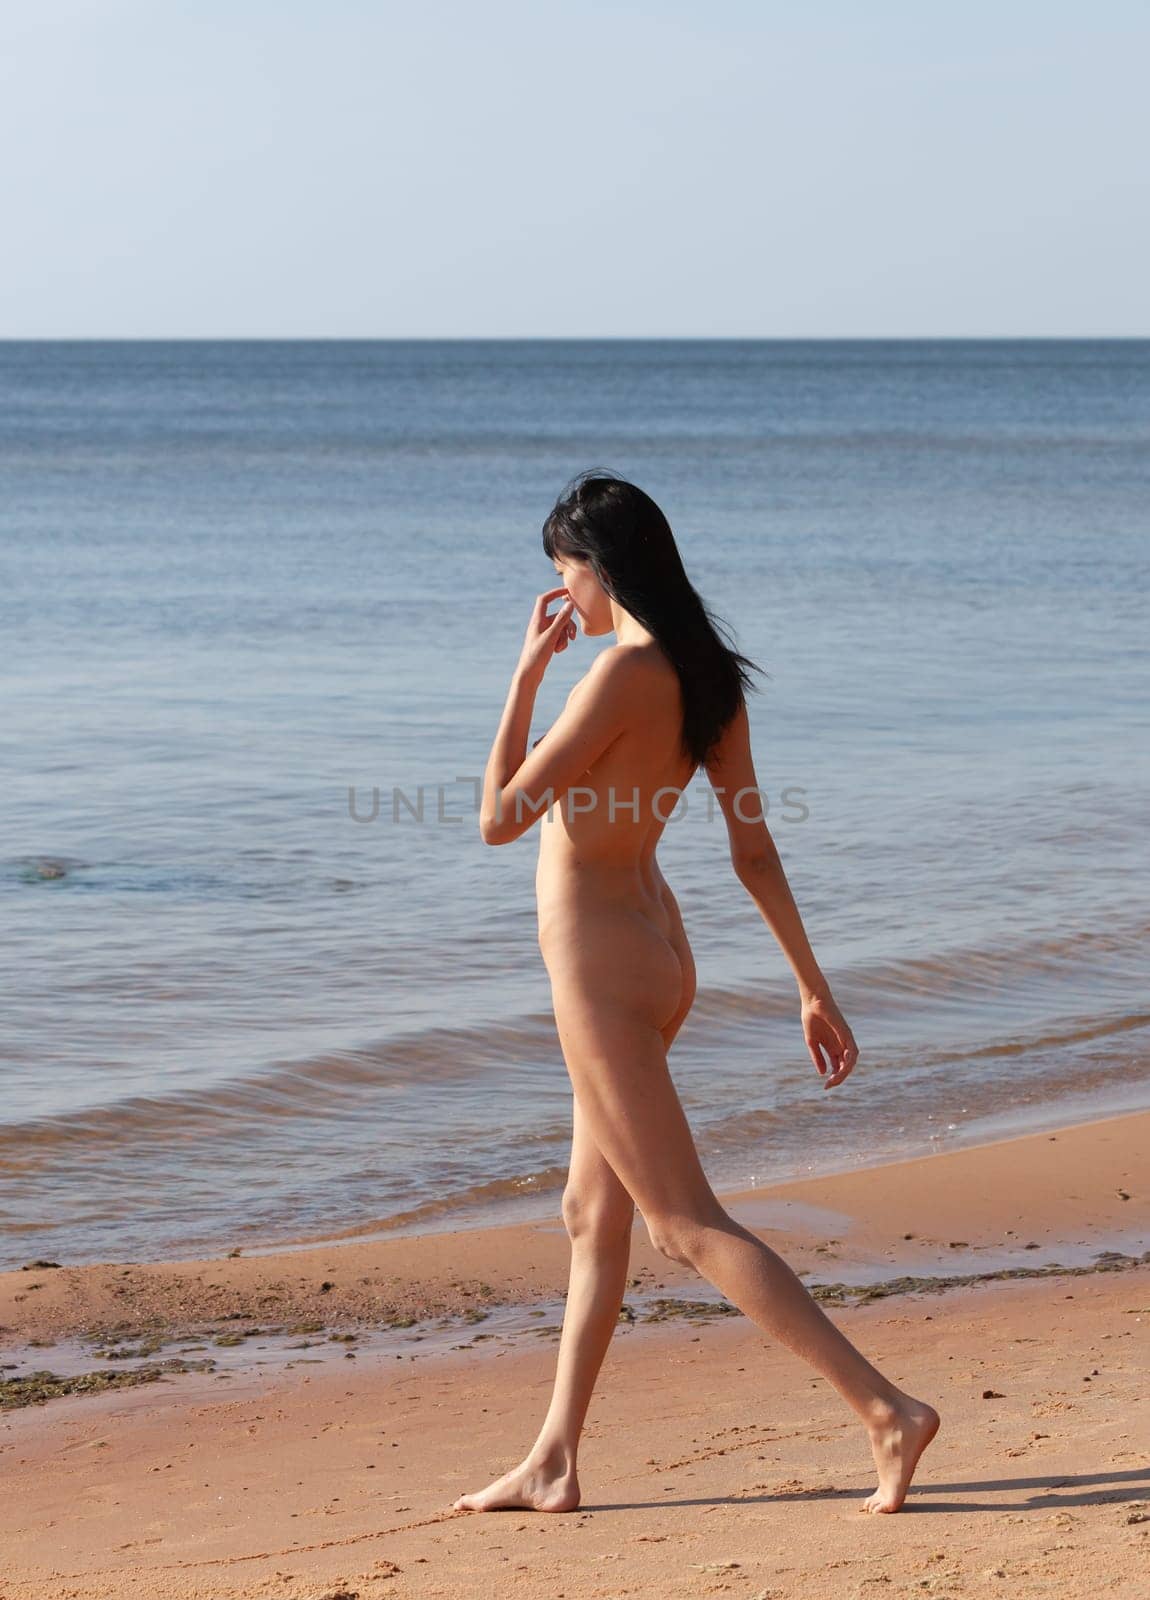 Nude Woman Posing At The Seaside by palinchak